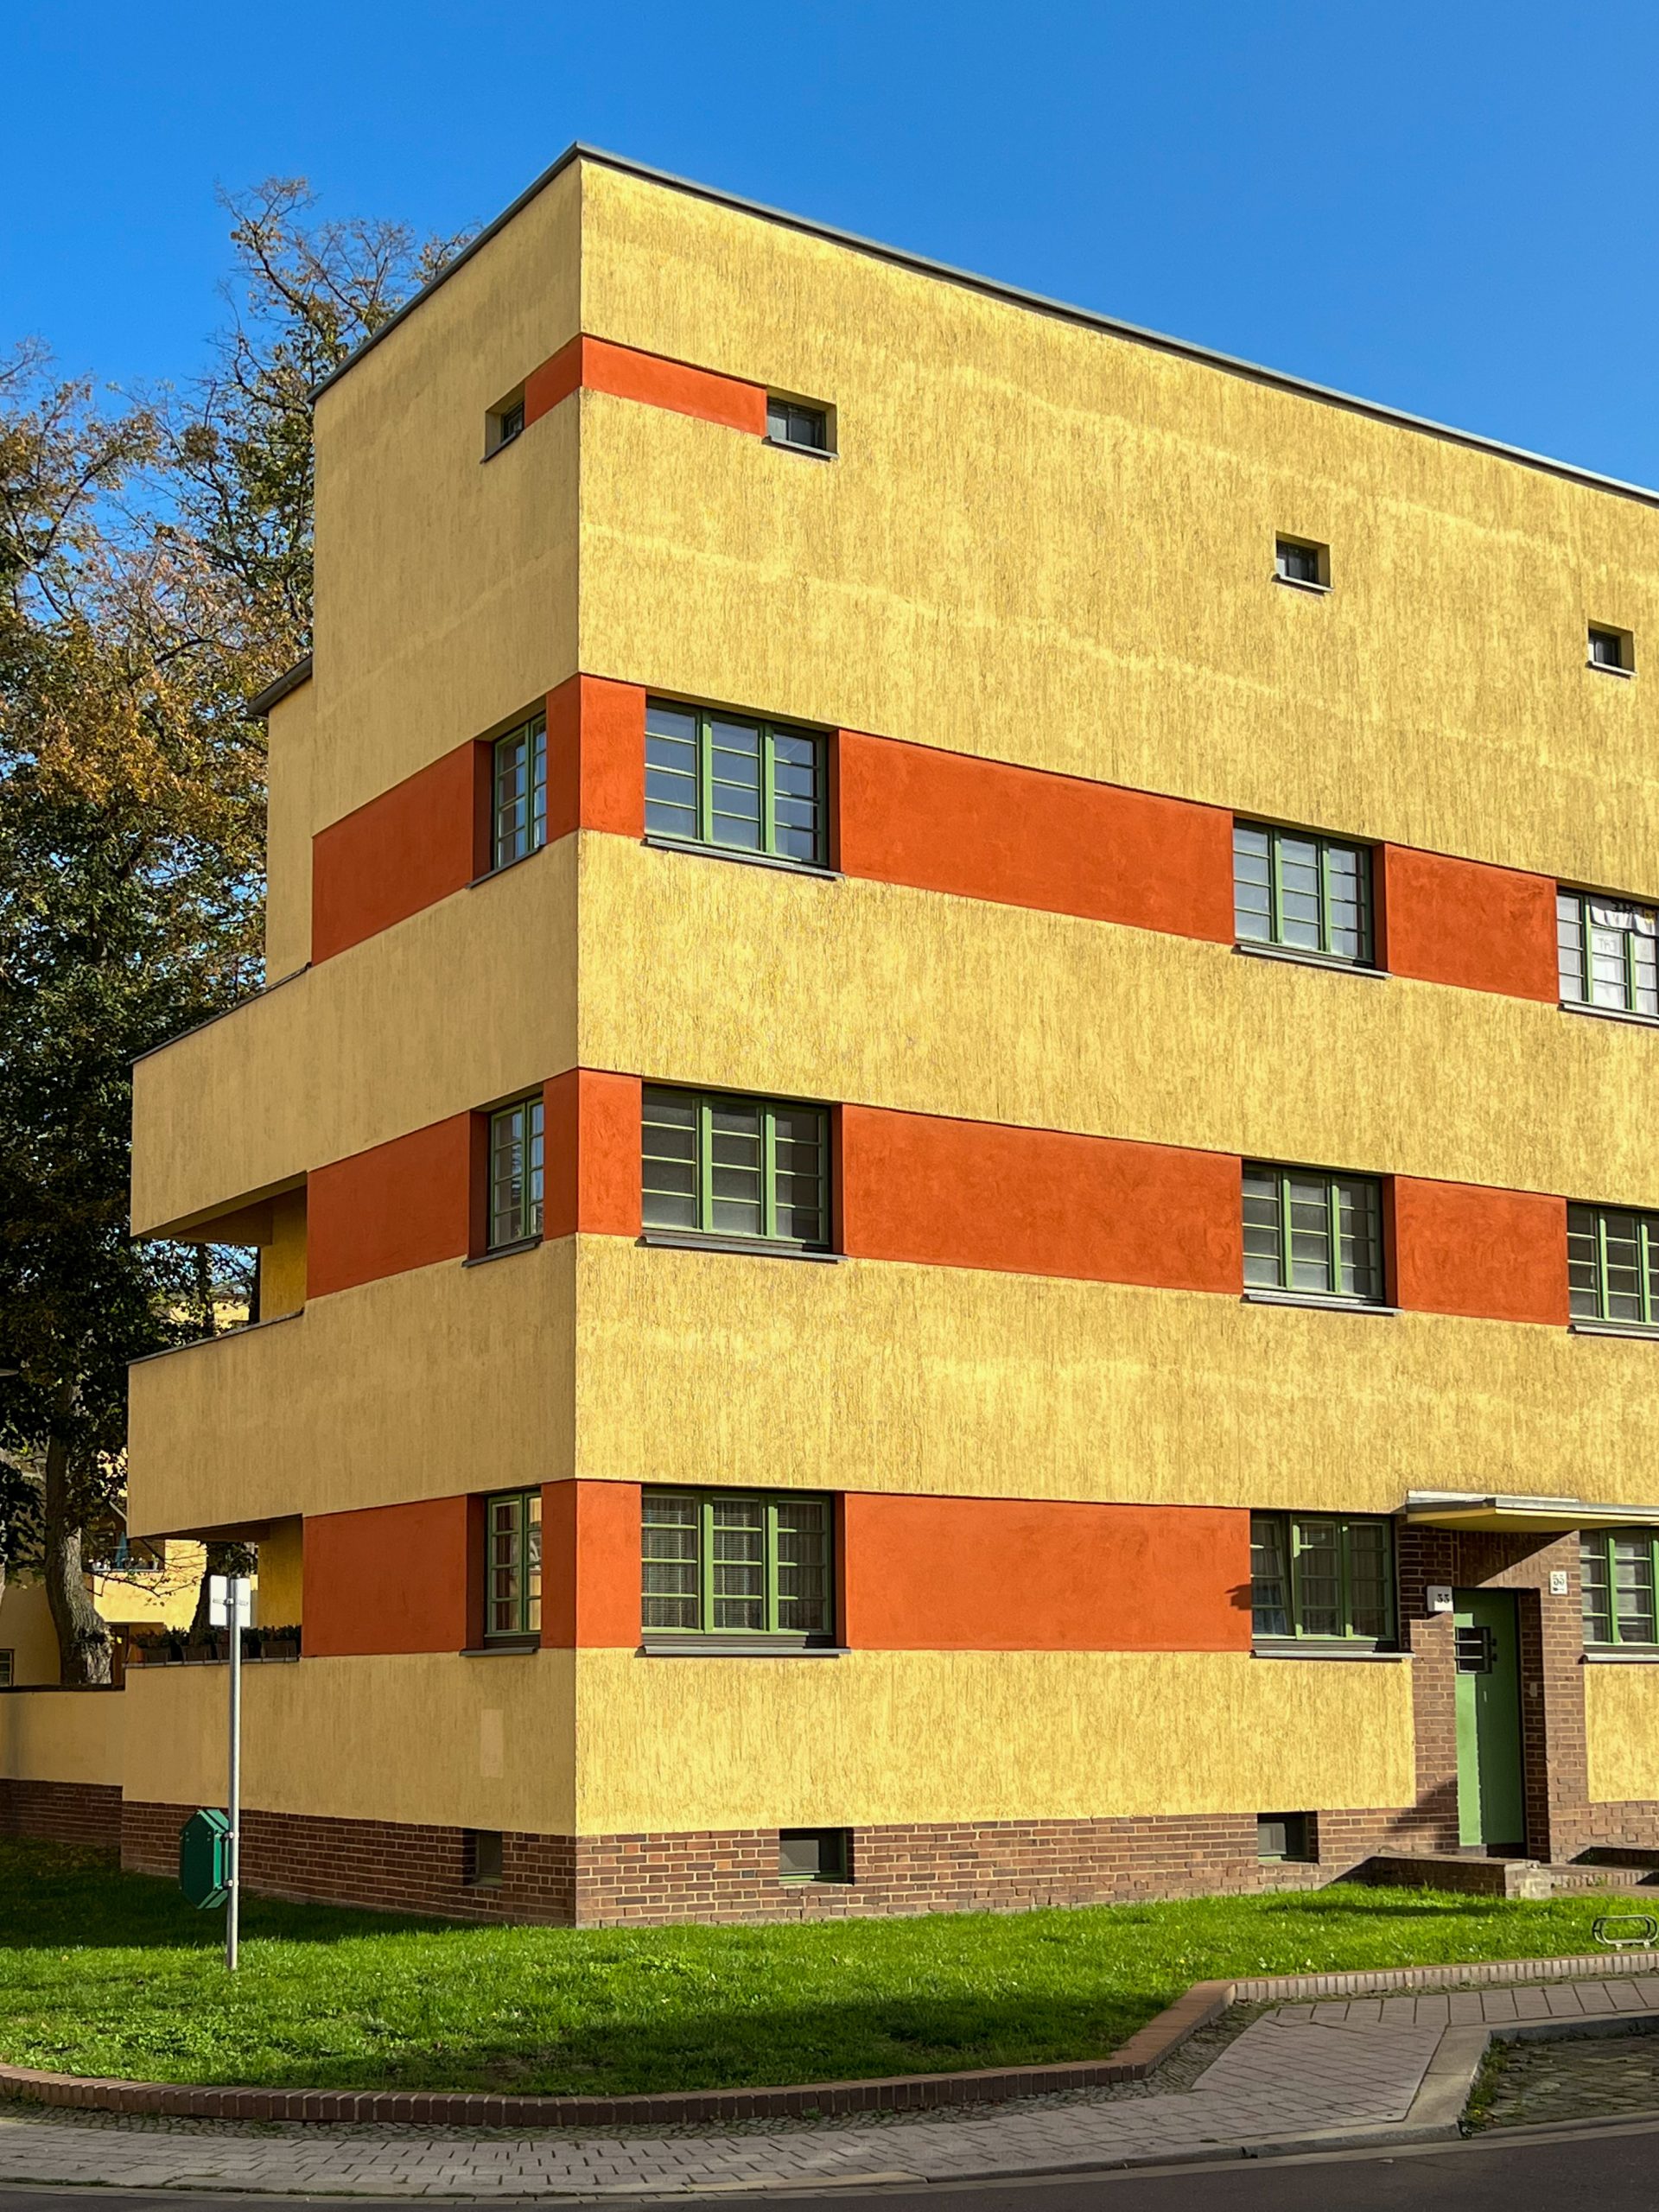 Hermann-Beims-Siedlung, 1925-1931. Architects: Johannes Göderitz ( head), Konrad Rühl, Gerhard Gauger, Willy Zabel, Adolf Otto. Photo: Daniela Christmann